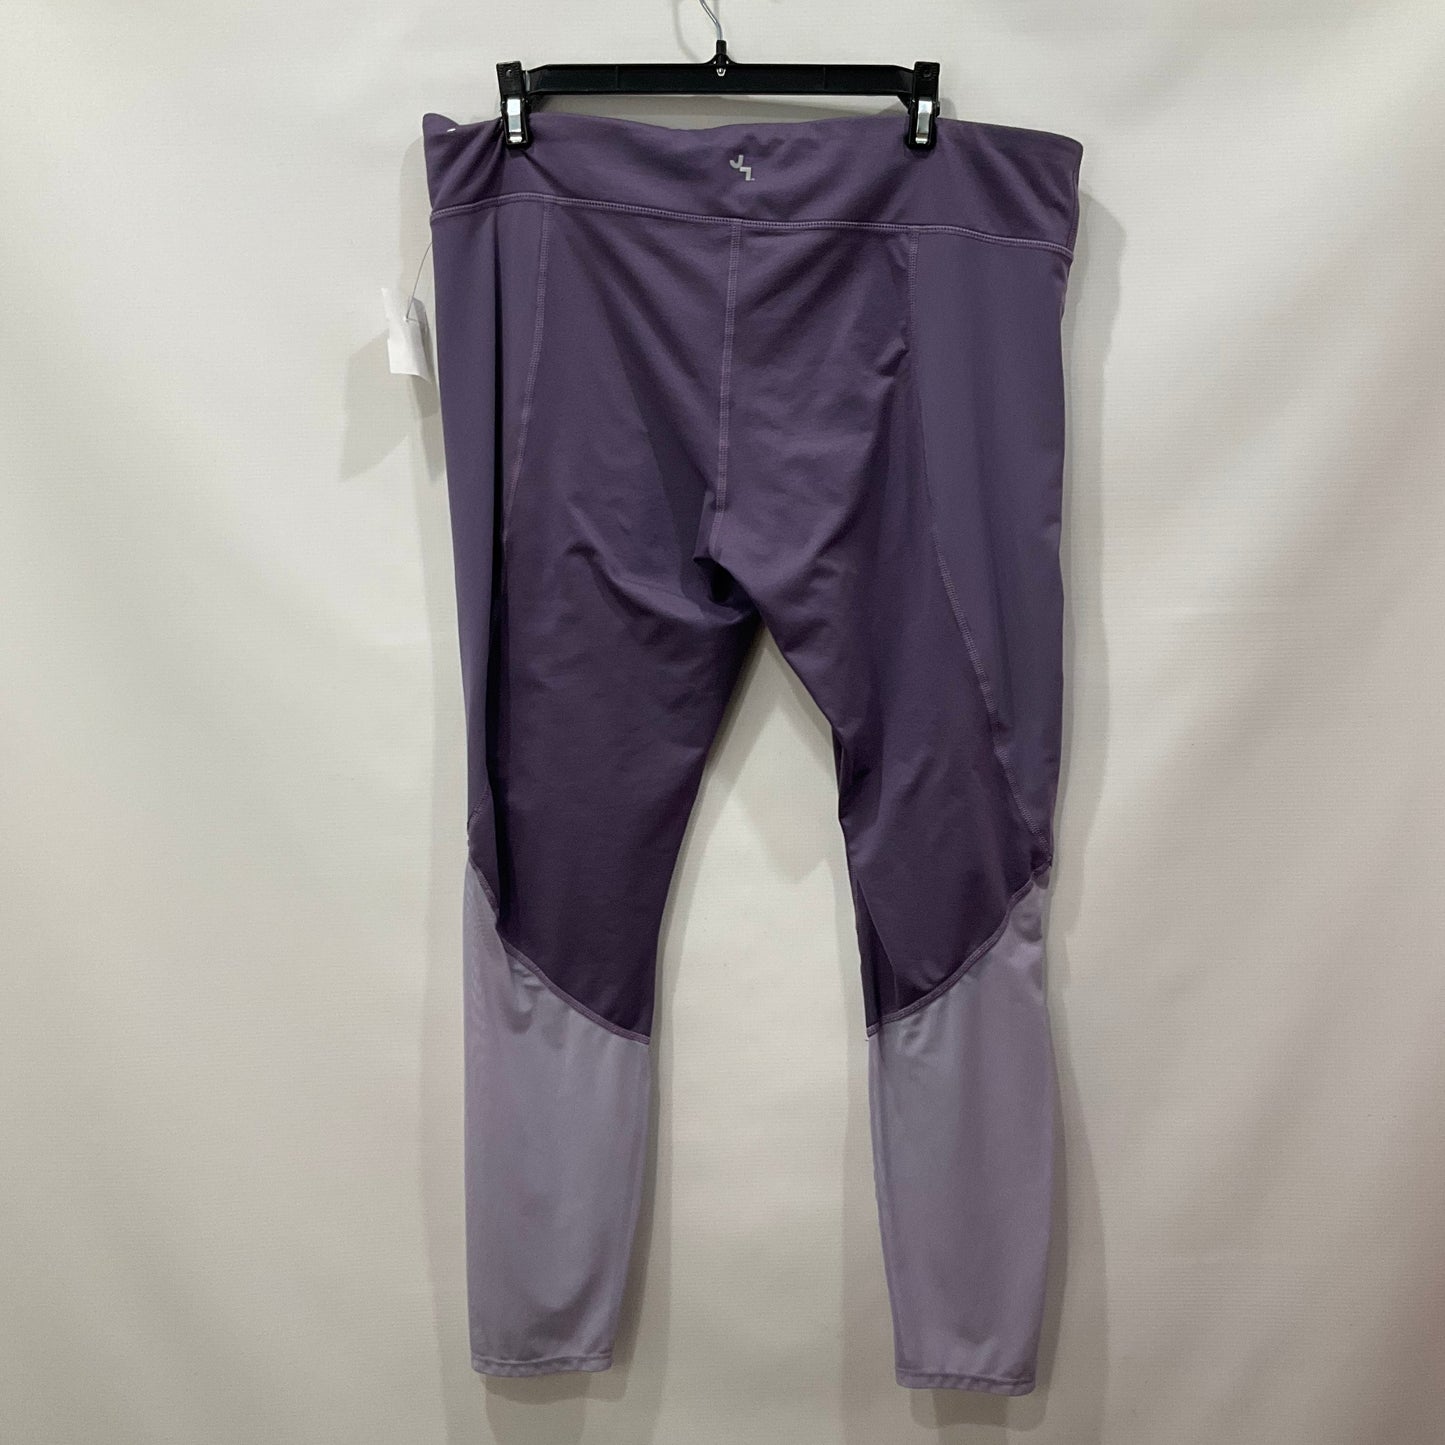 Purple Athletic Leggings Joy Lab, Size 2x